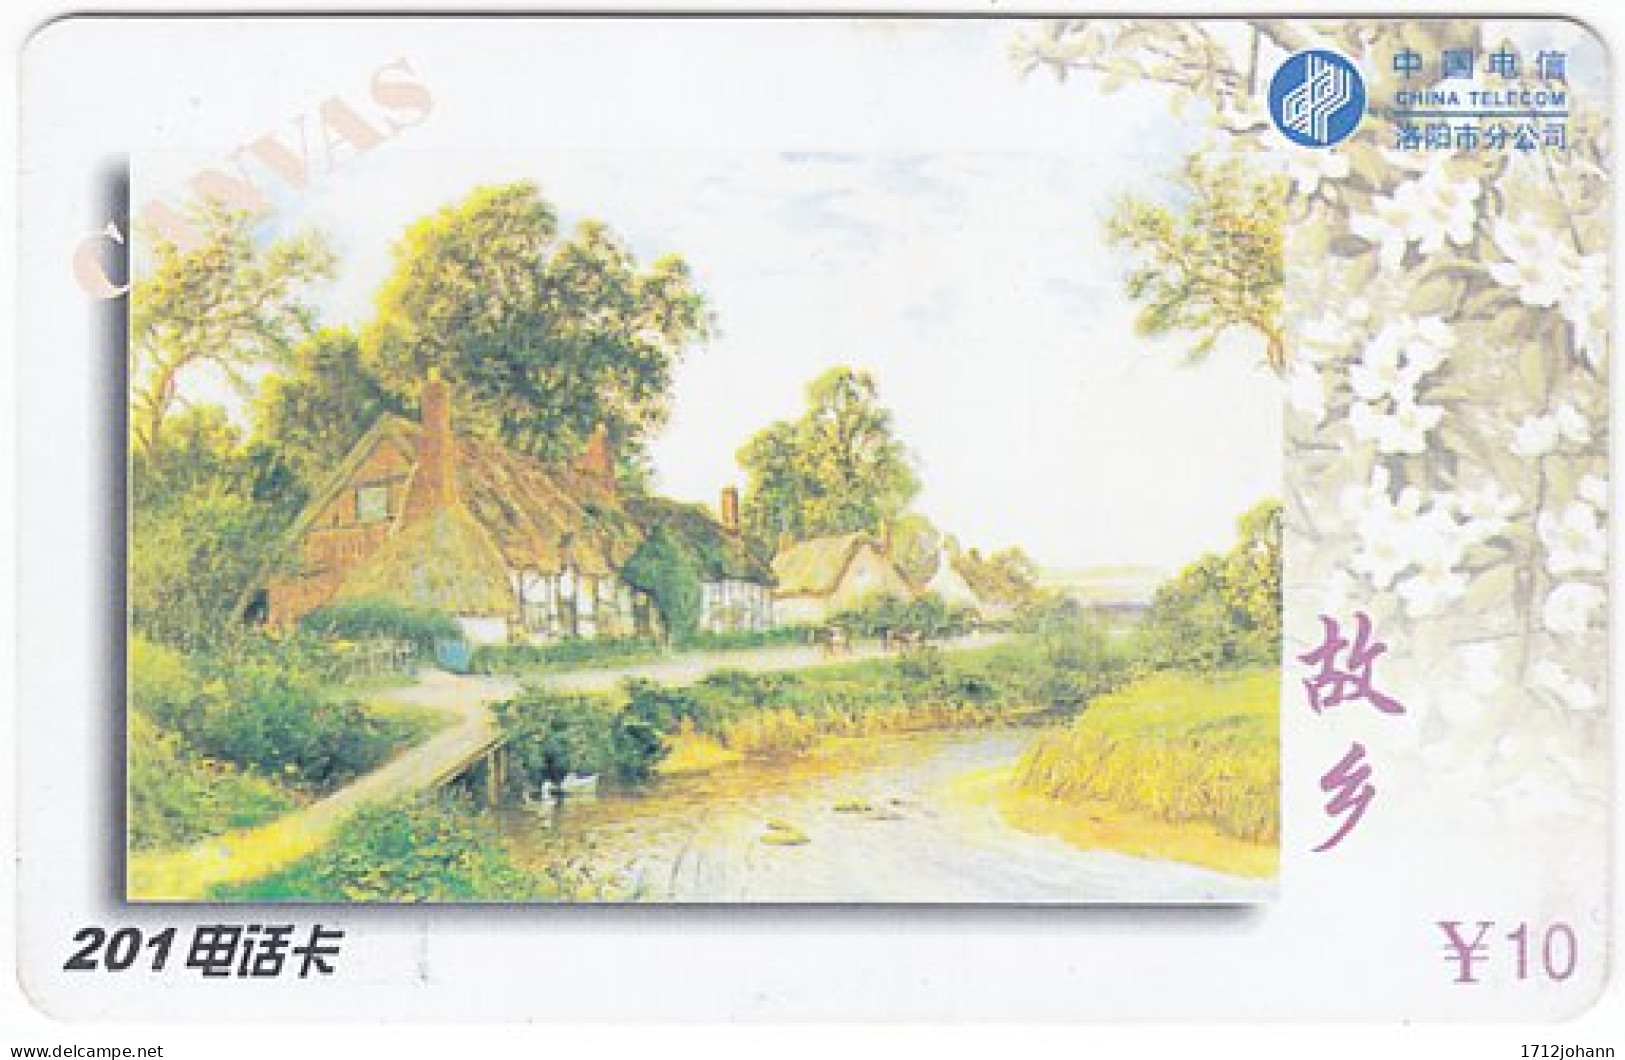 CHINA I-702 Prepaid ChinaTelecom - Painting, Landscape - Used - China